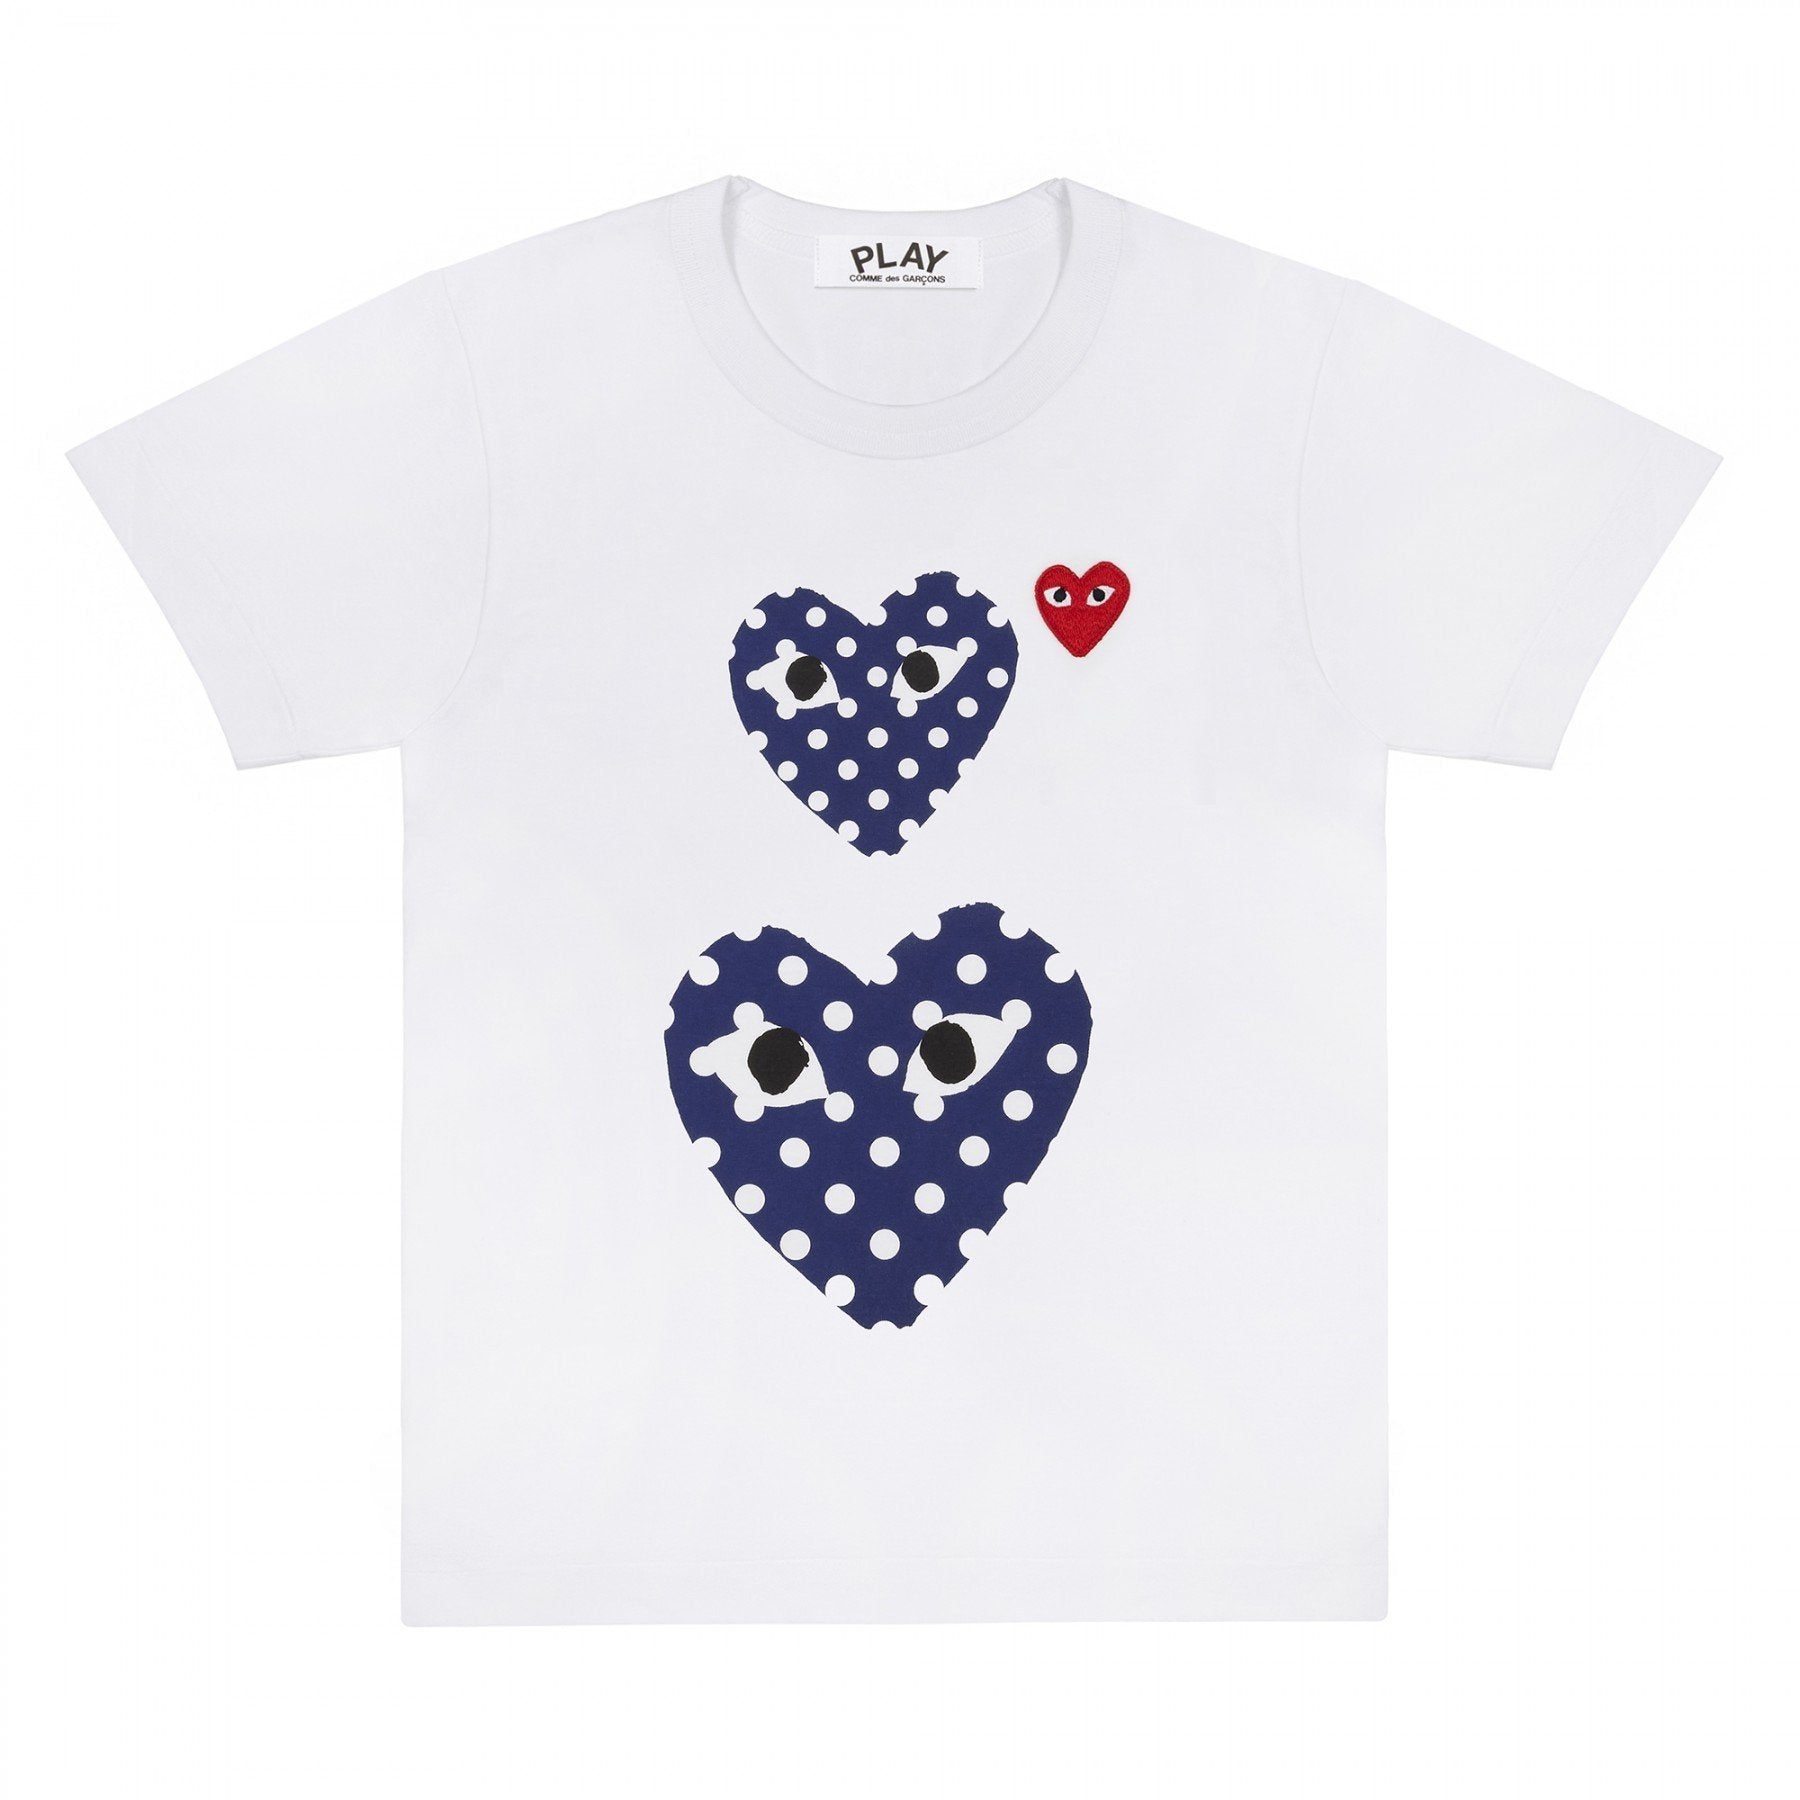 PLAY White T-Shirt with Polka Dot Printed Small and Big Hearts